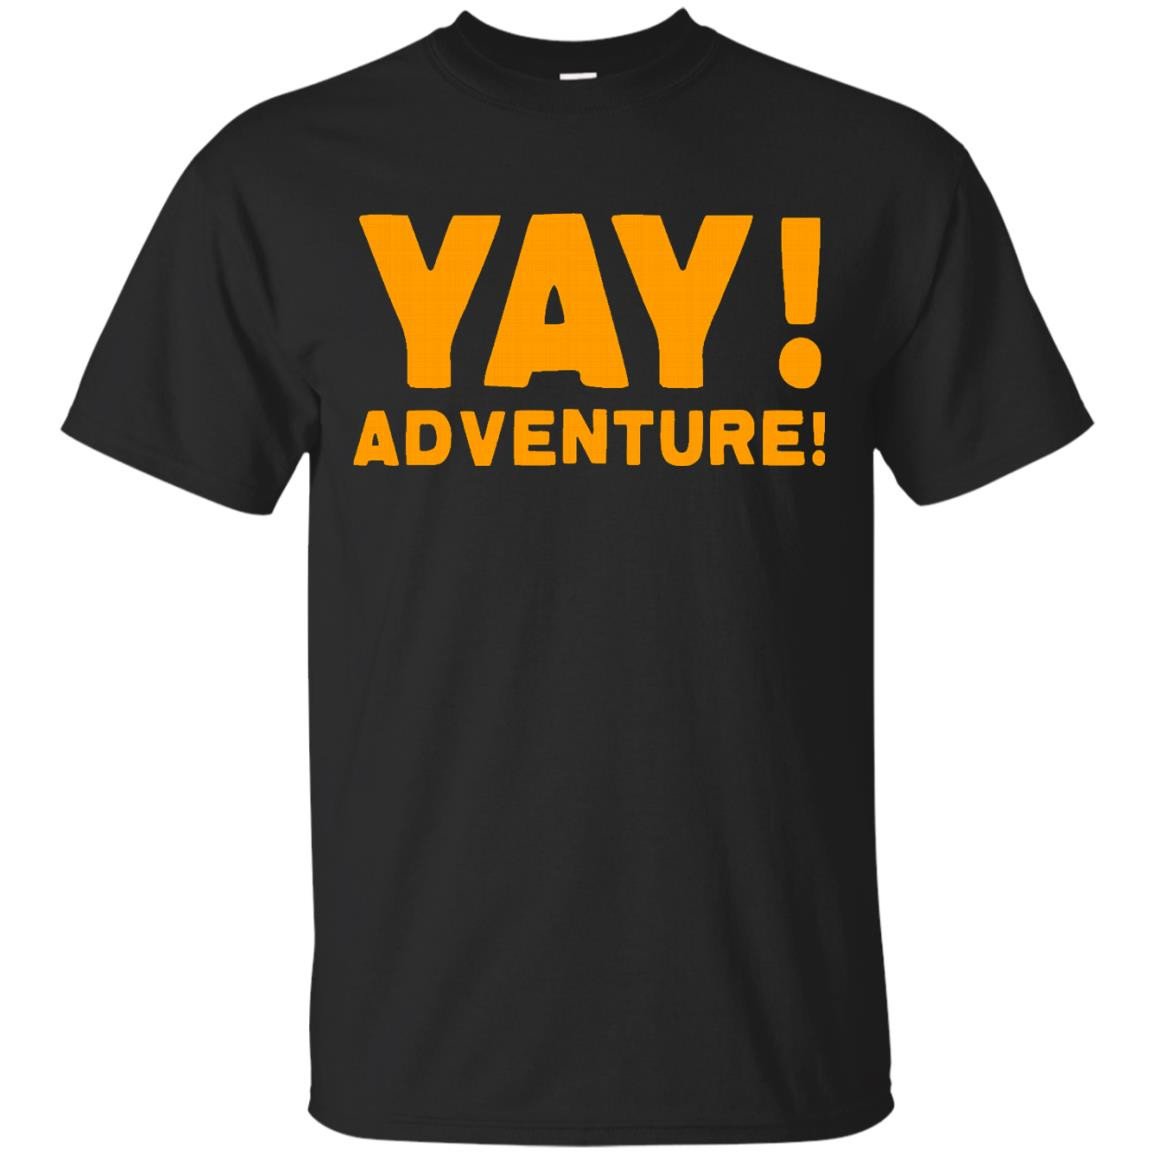 Yay! Adventure Shirt